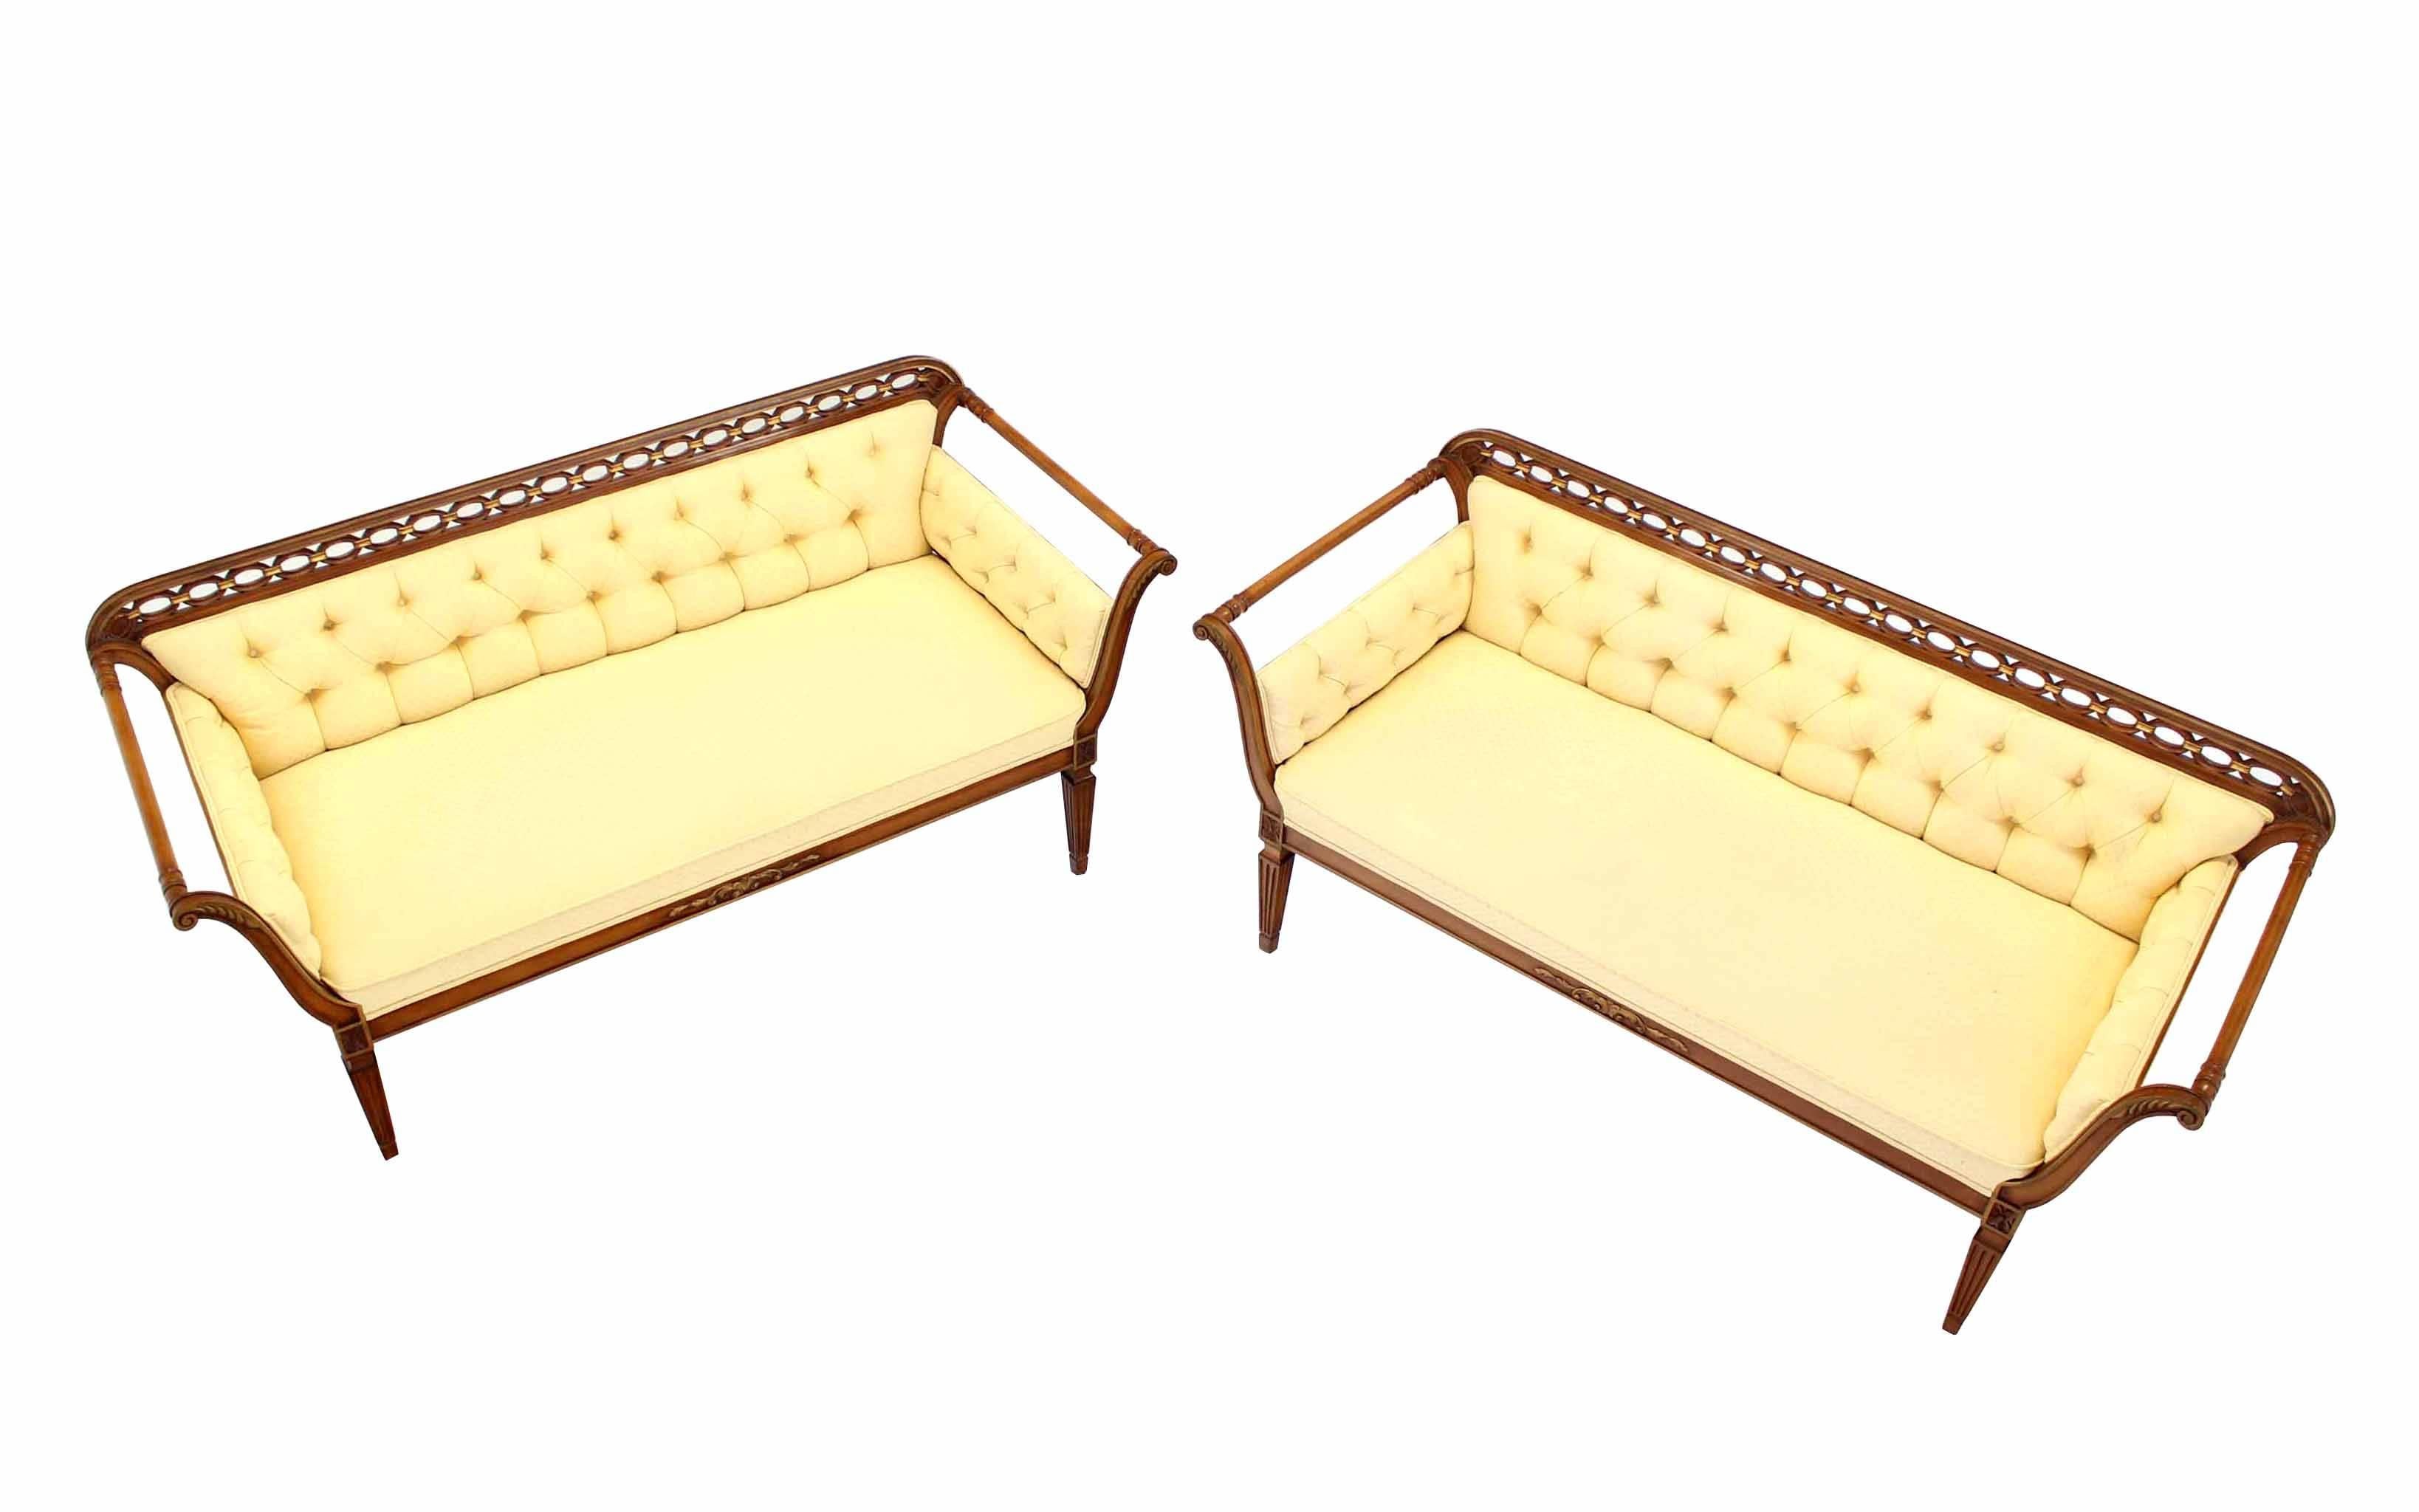 Pair of Regency Style Sofas or Loveseats Gold Upholstery 1